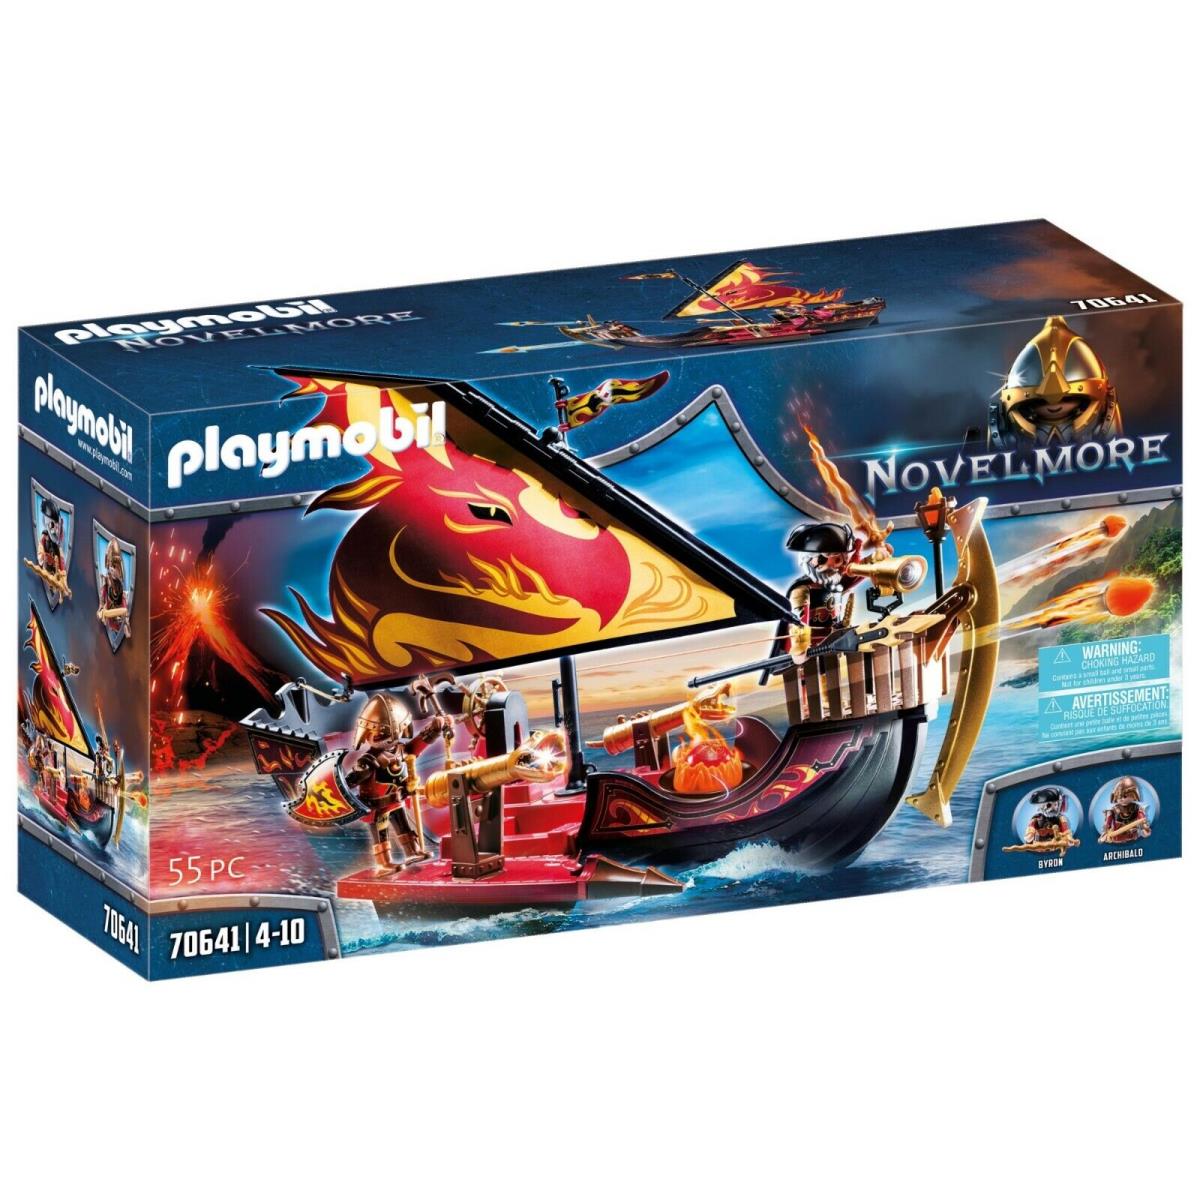 Playmobil Novelmore Burnham Raiders Fire Ship Set 70641